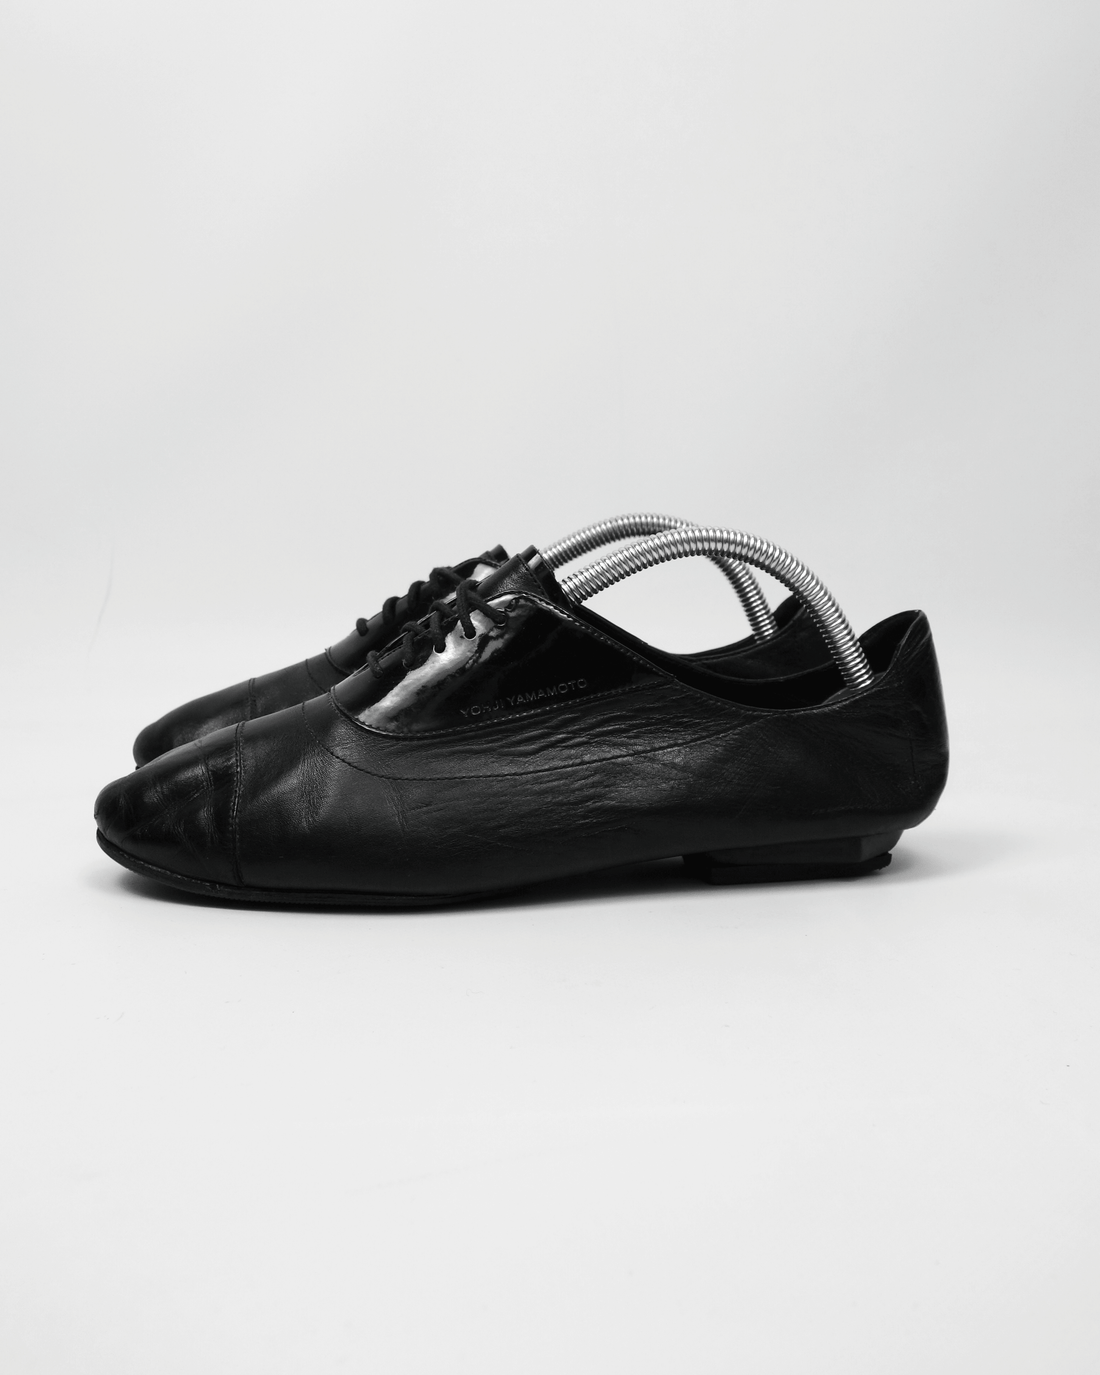 Yohji Yamamoto Y-3 Black Leather Shoes 2000's